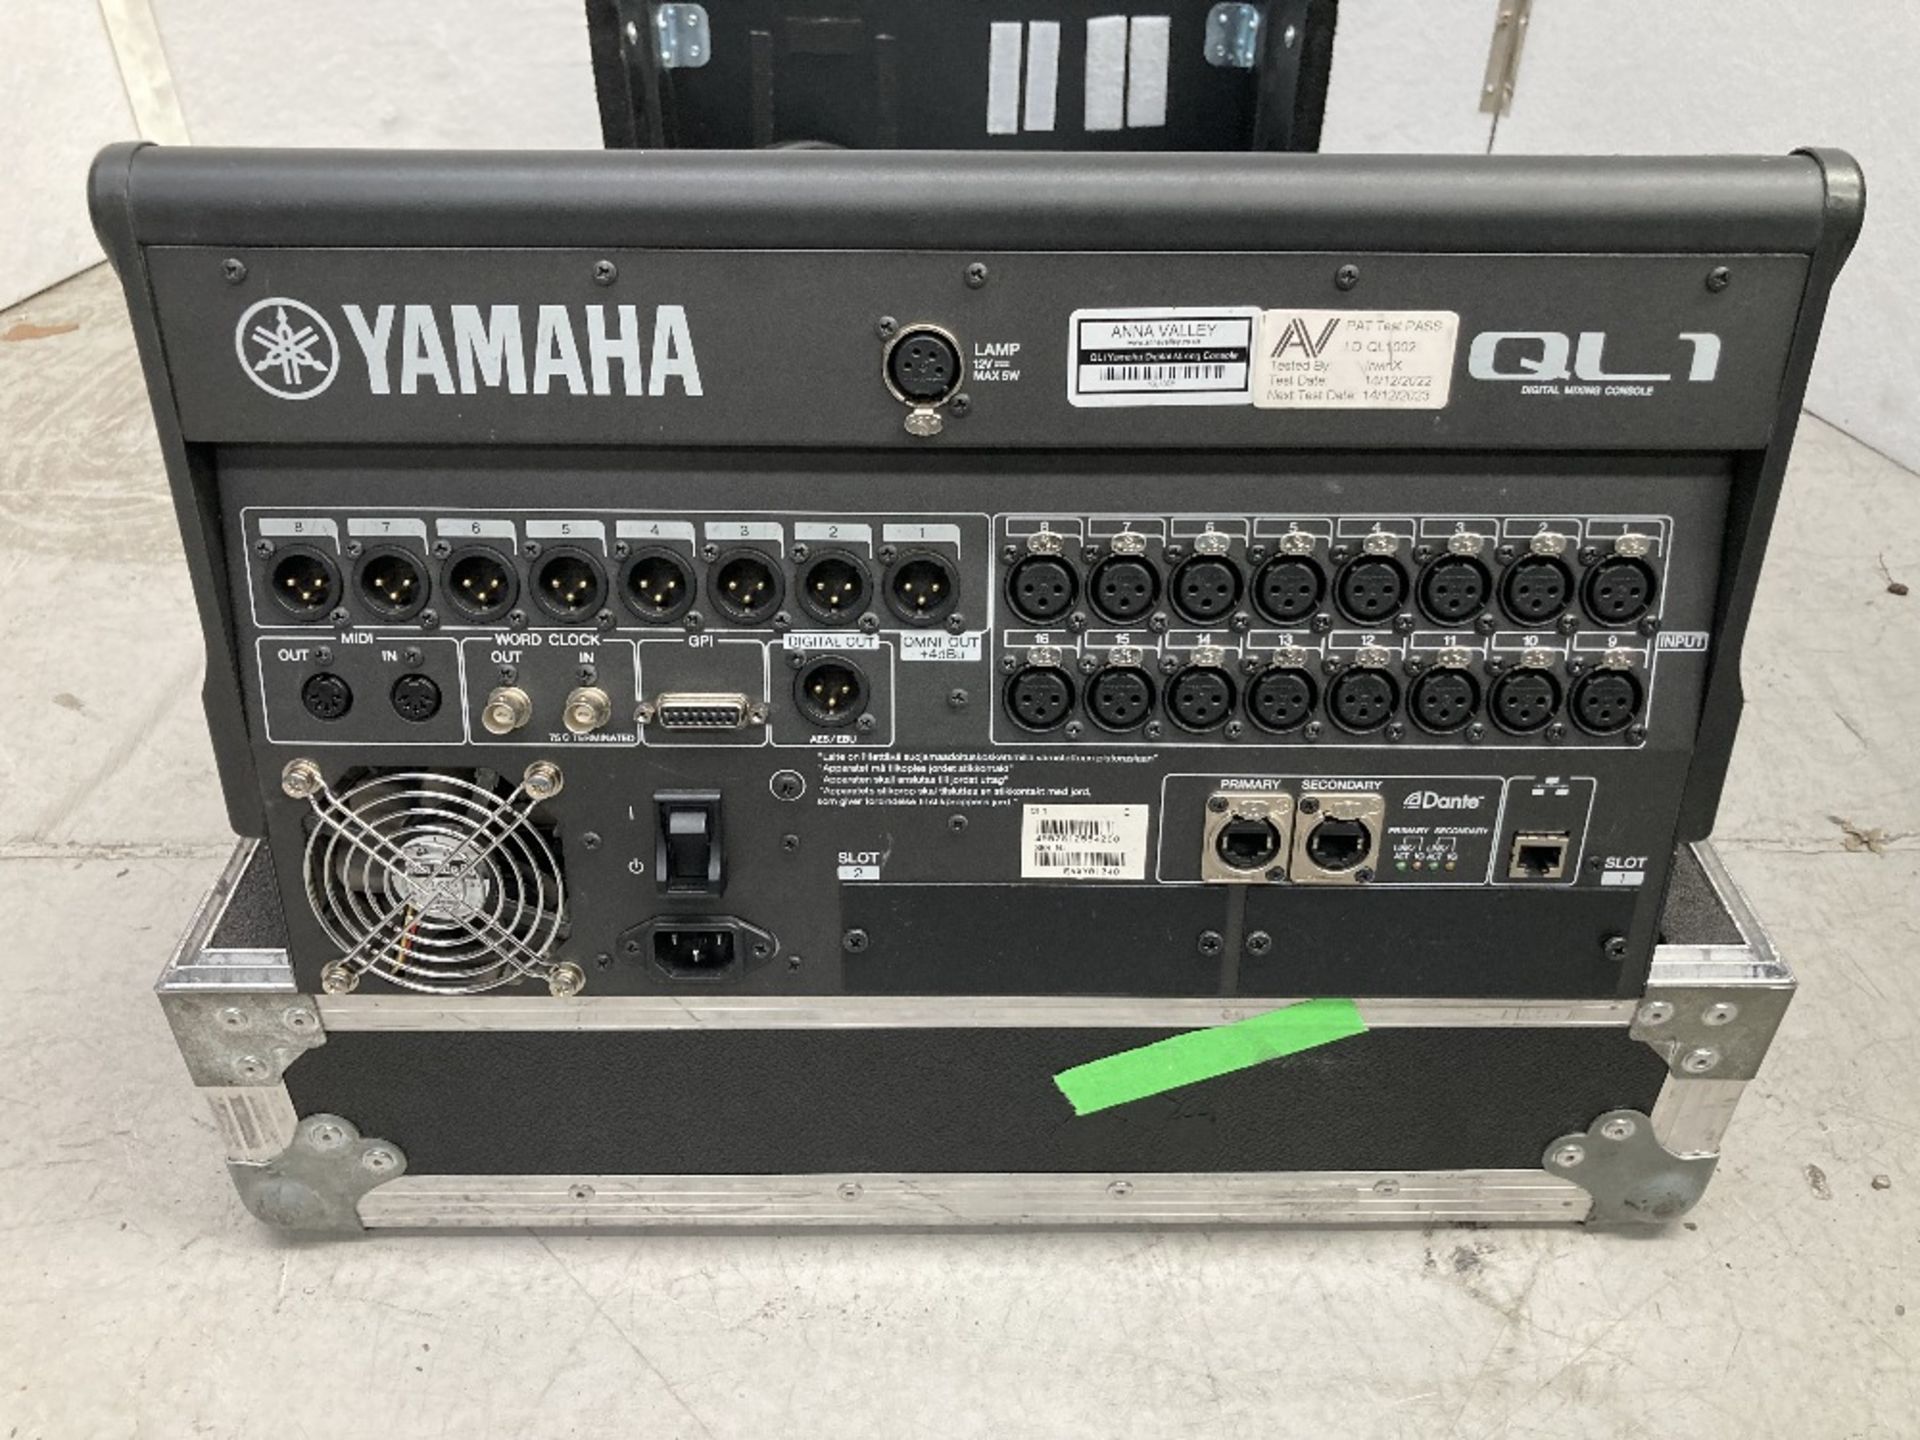 Yamaha QL1 Digital Mixing Console & Heavy Duty Mobile Flight Case - Image 6 of 14